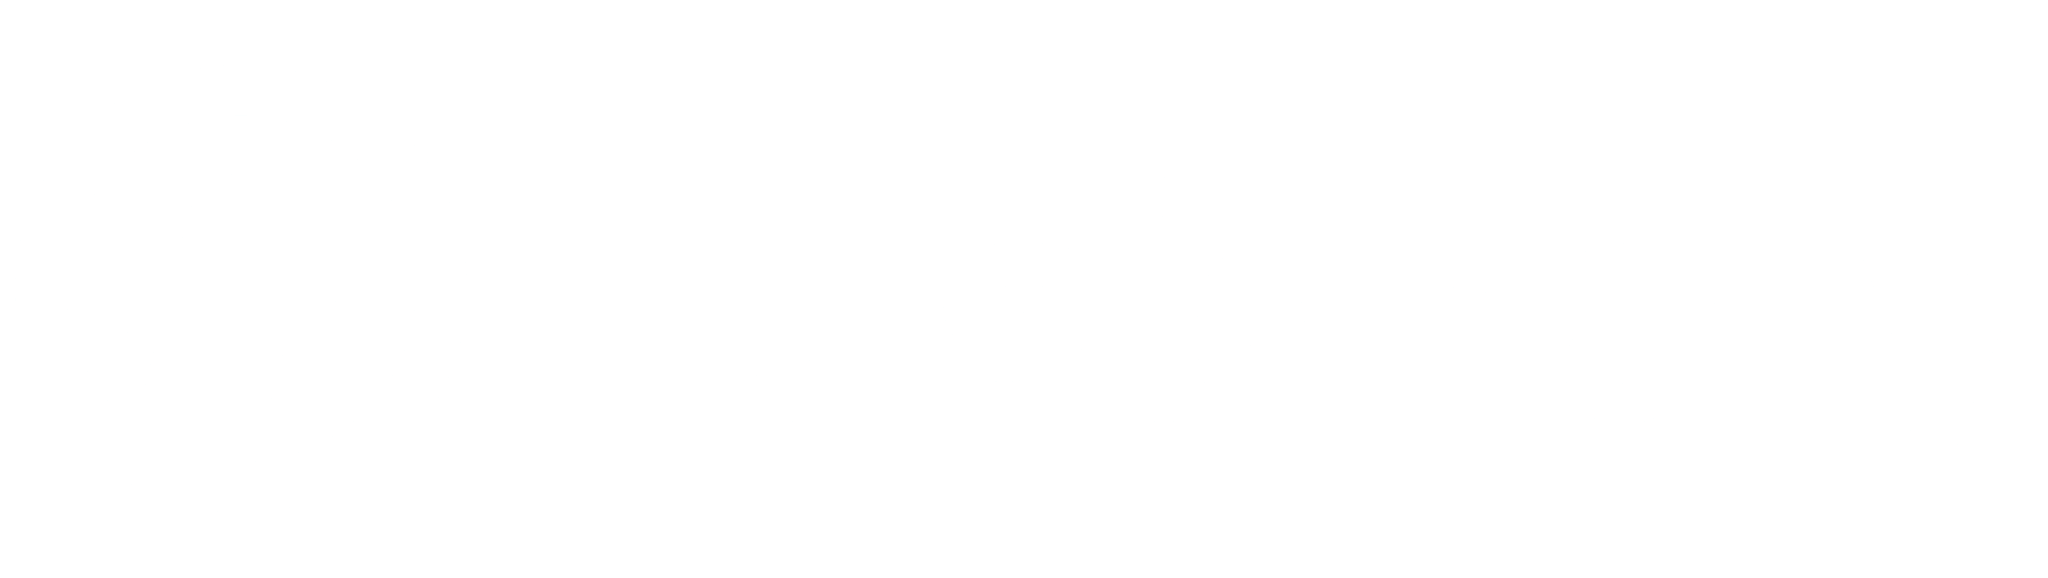 Logo image of Fusionary card.